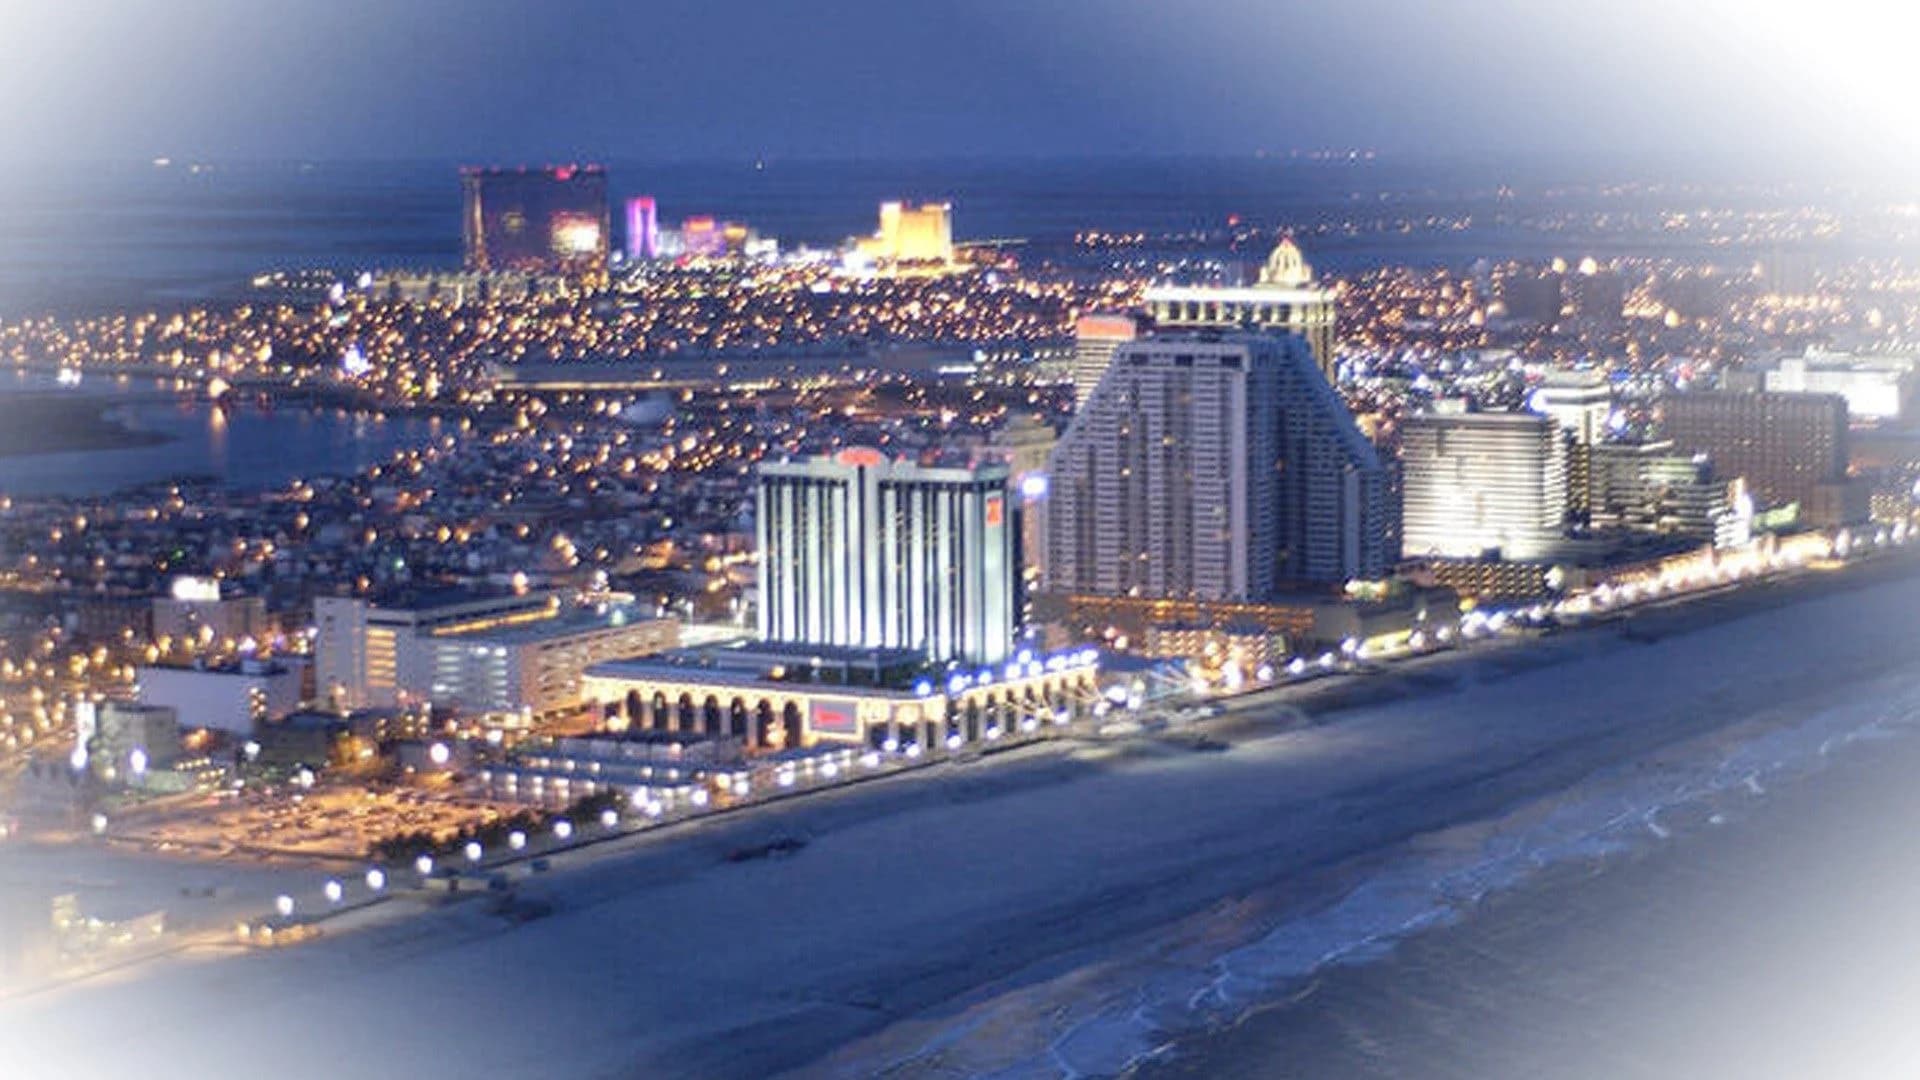 Harrah's casino in Atlantic City plans $56M hotel renovation